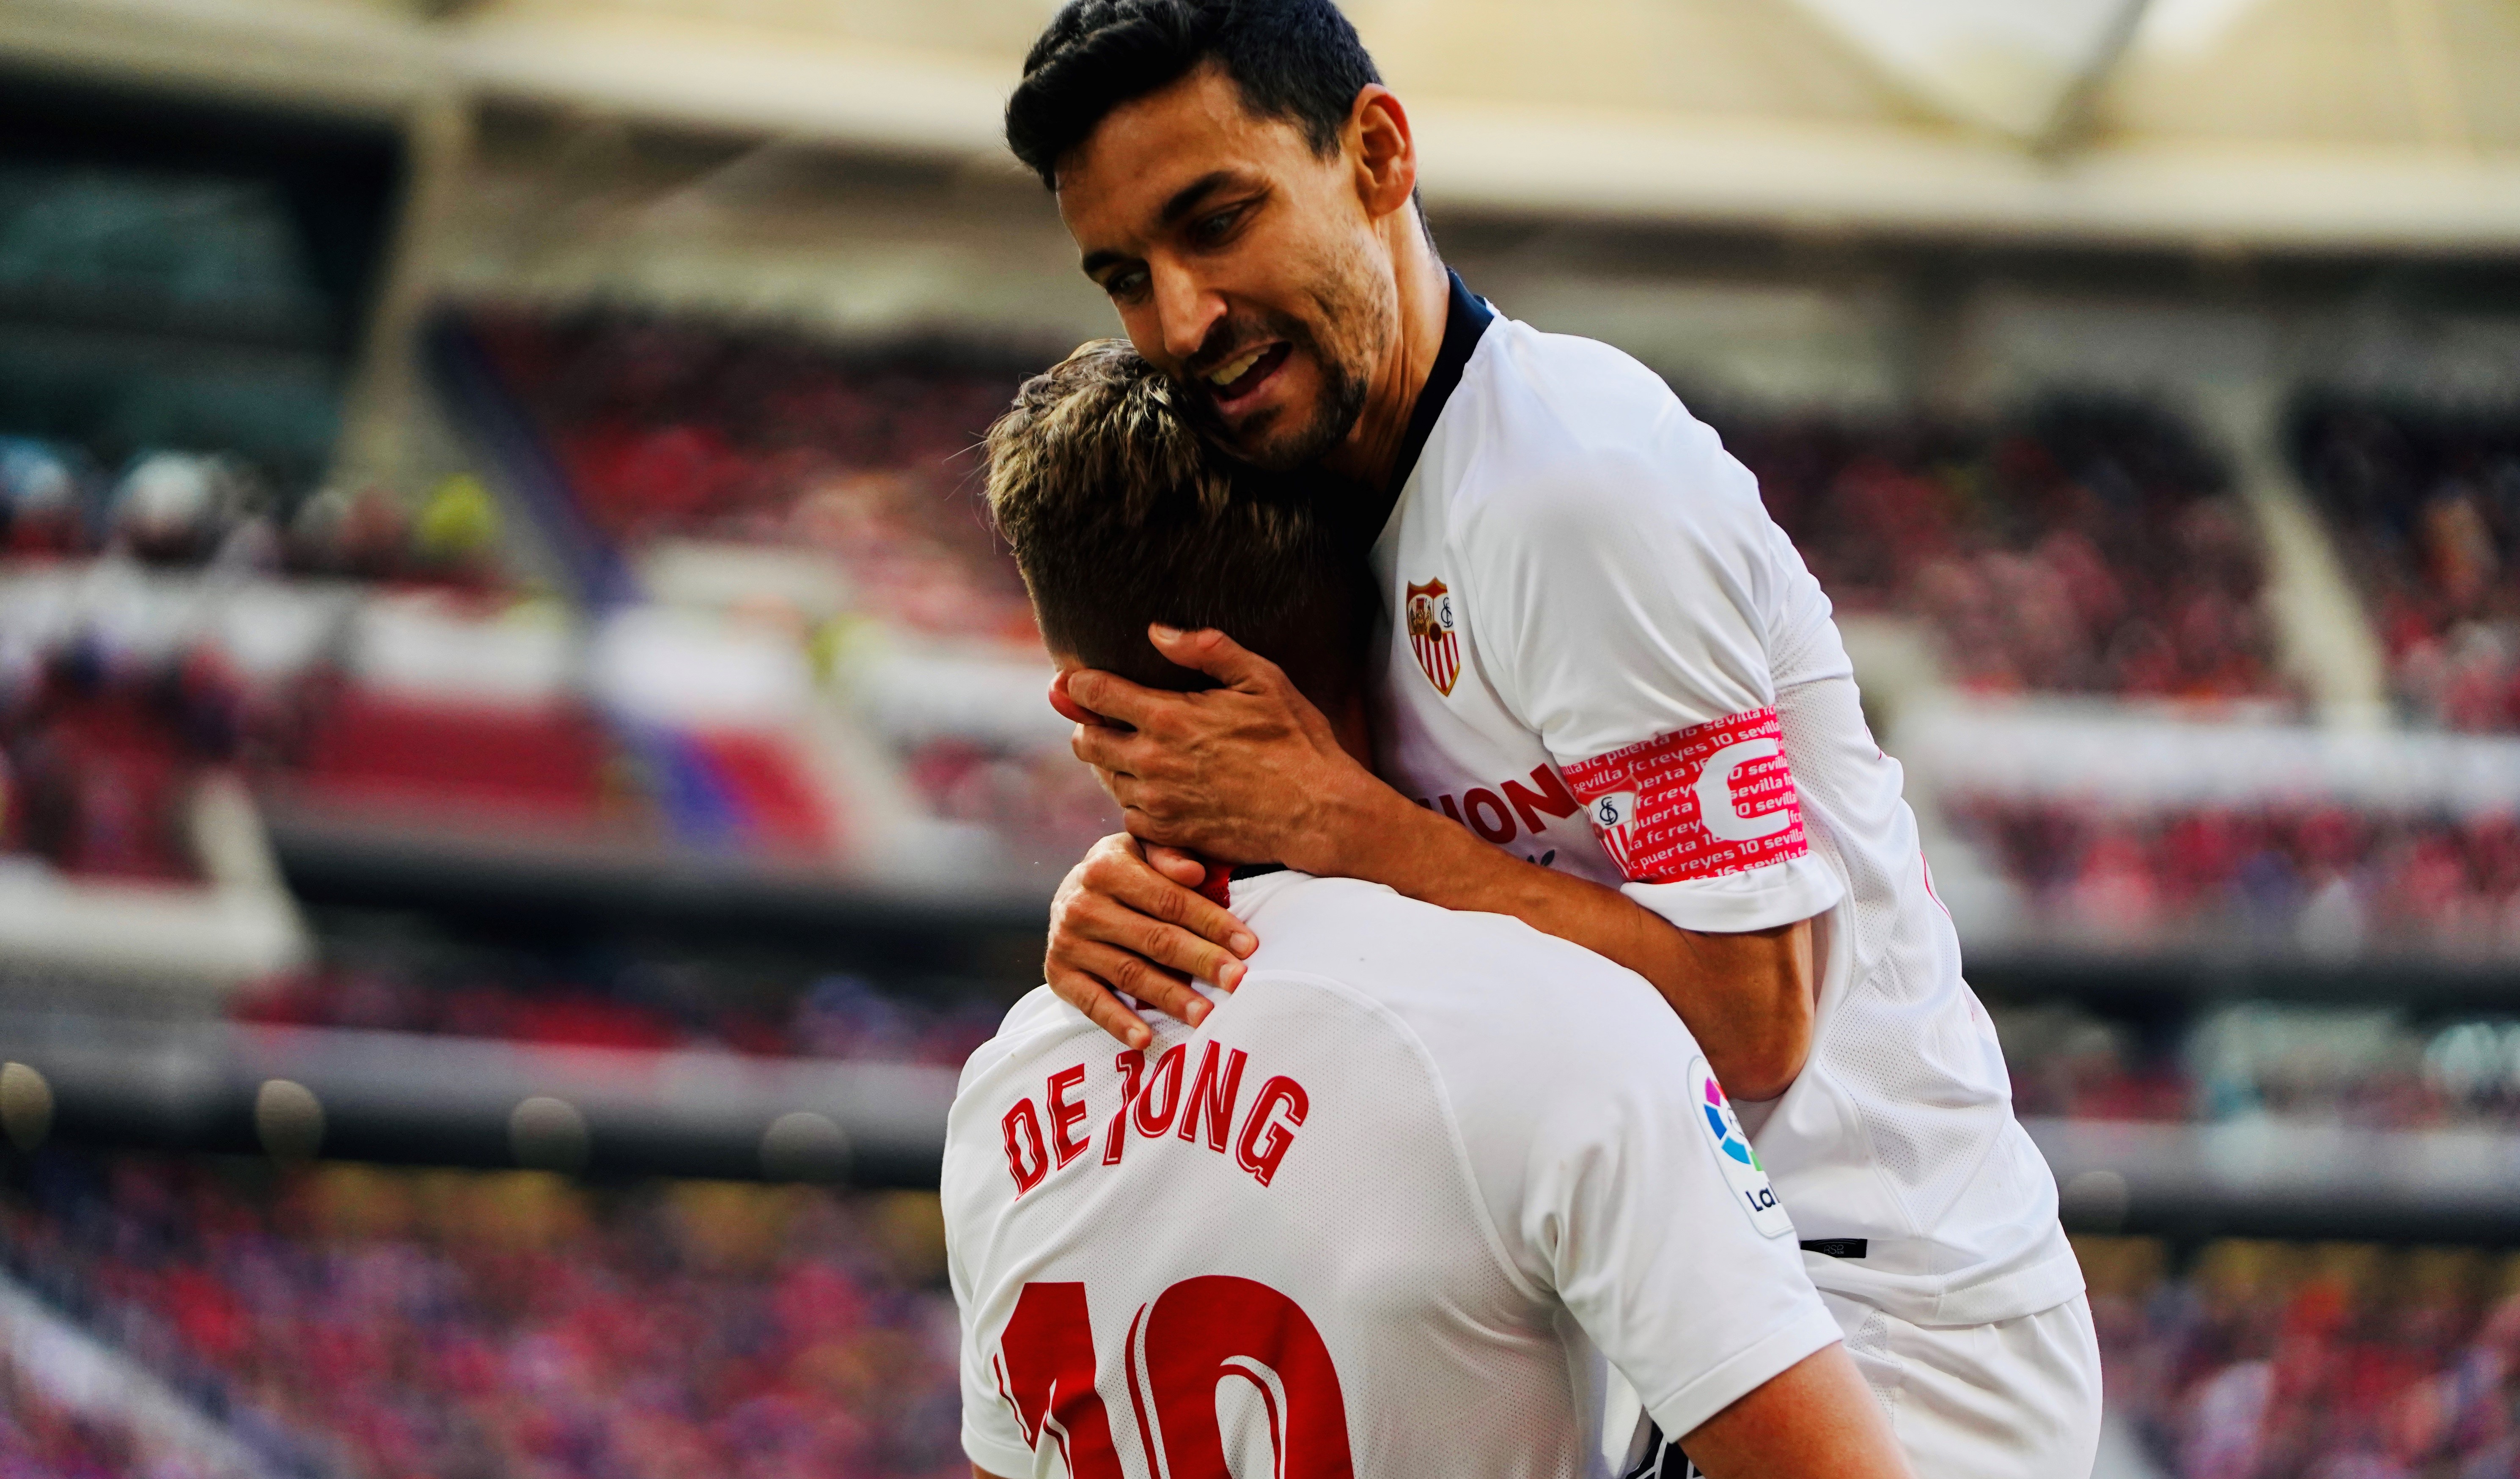 De Jong and Jesús Navas celebrate a goal 